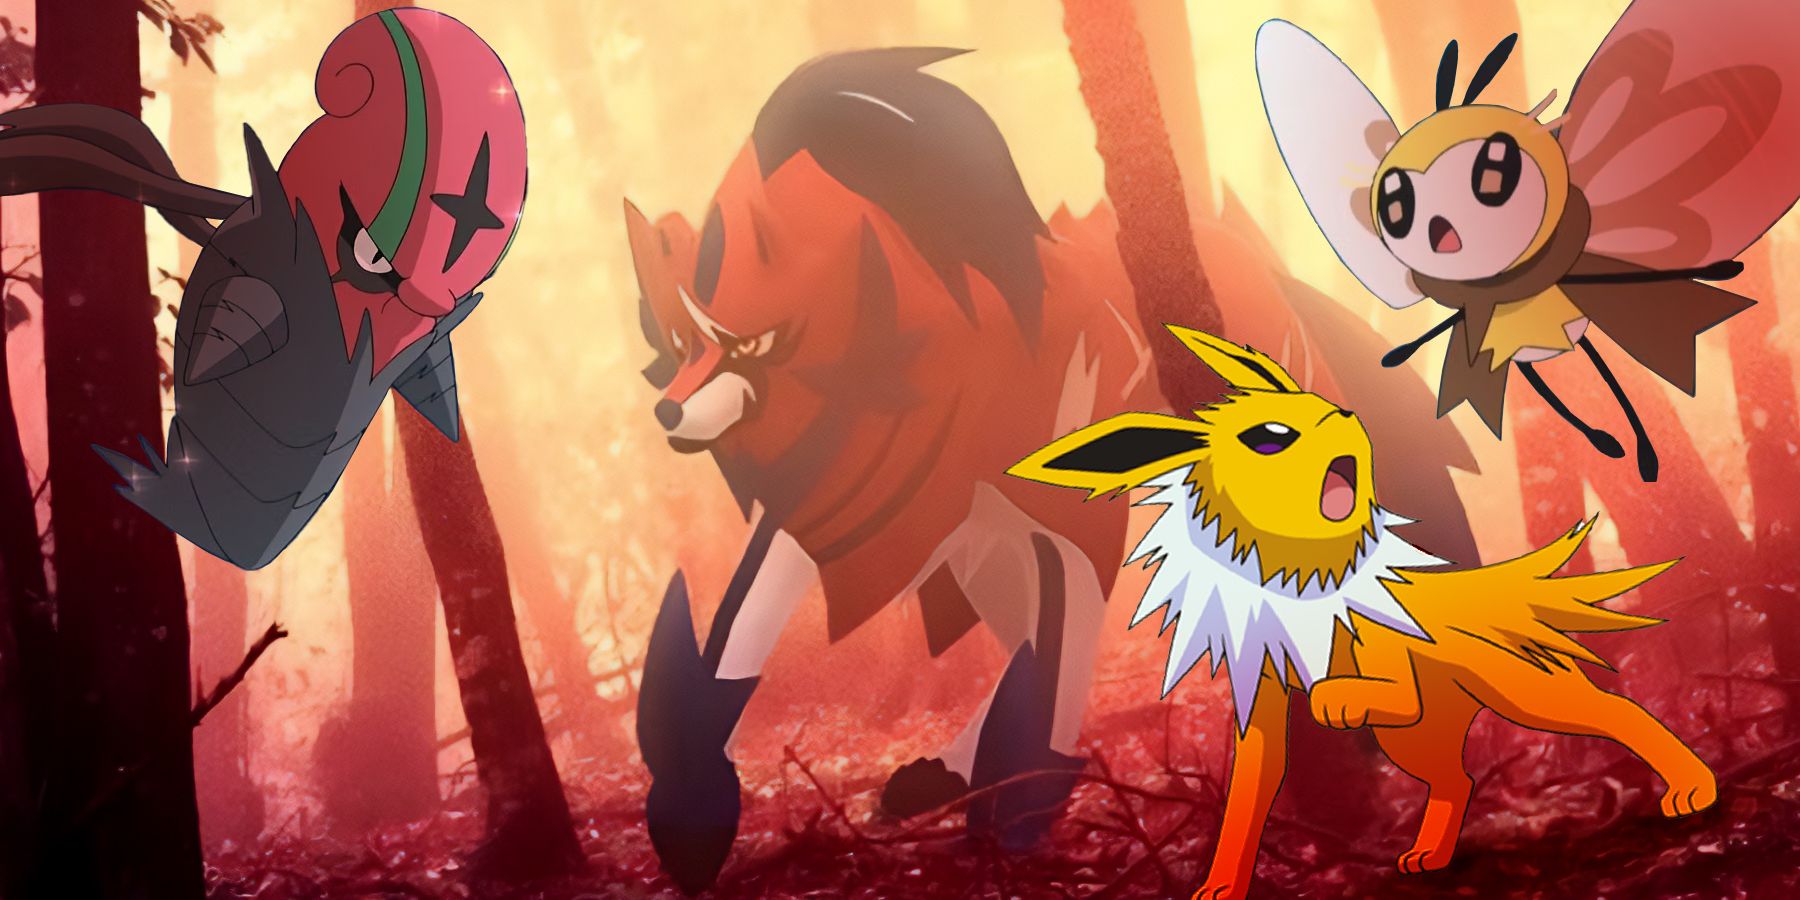 New Pokémon assets found, include Marshadow, Mega Mewtwo